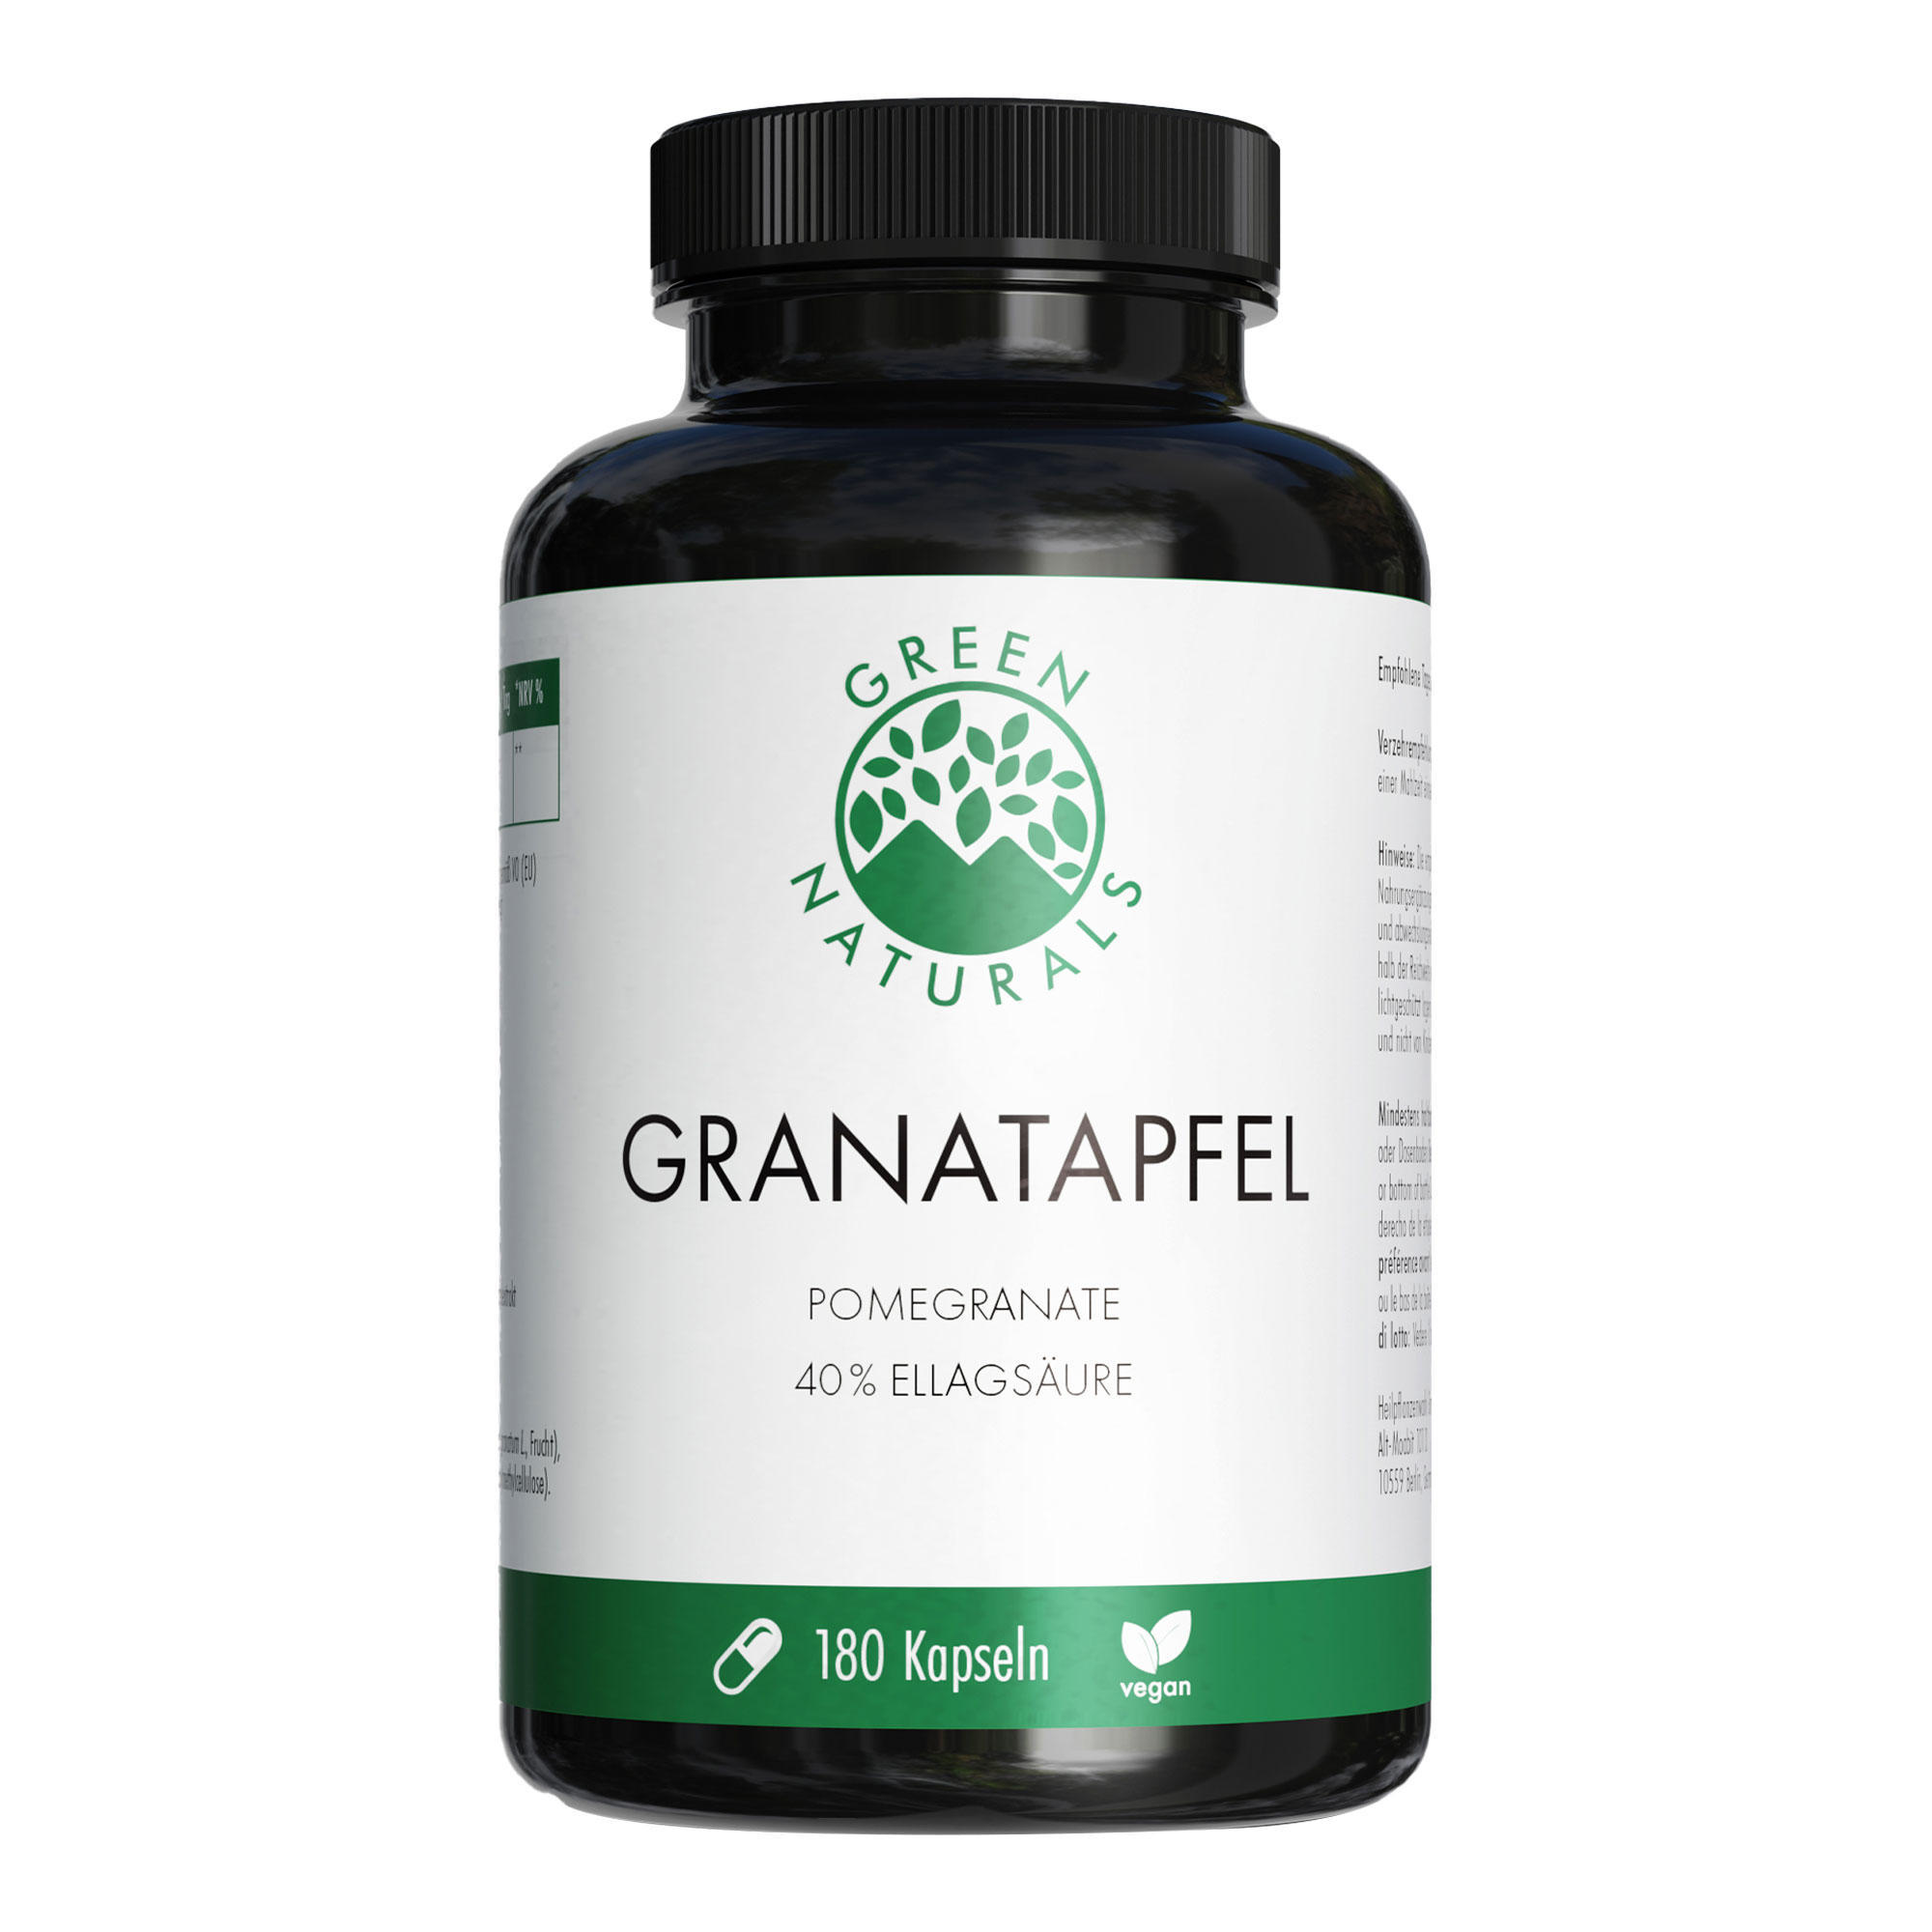 Nahrungsergänzungsmittel mit Granatapfel-Extrakt (40% Ellagsäure).